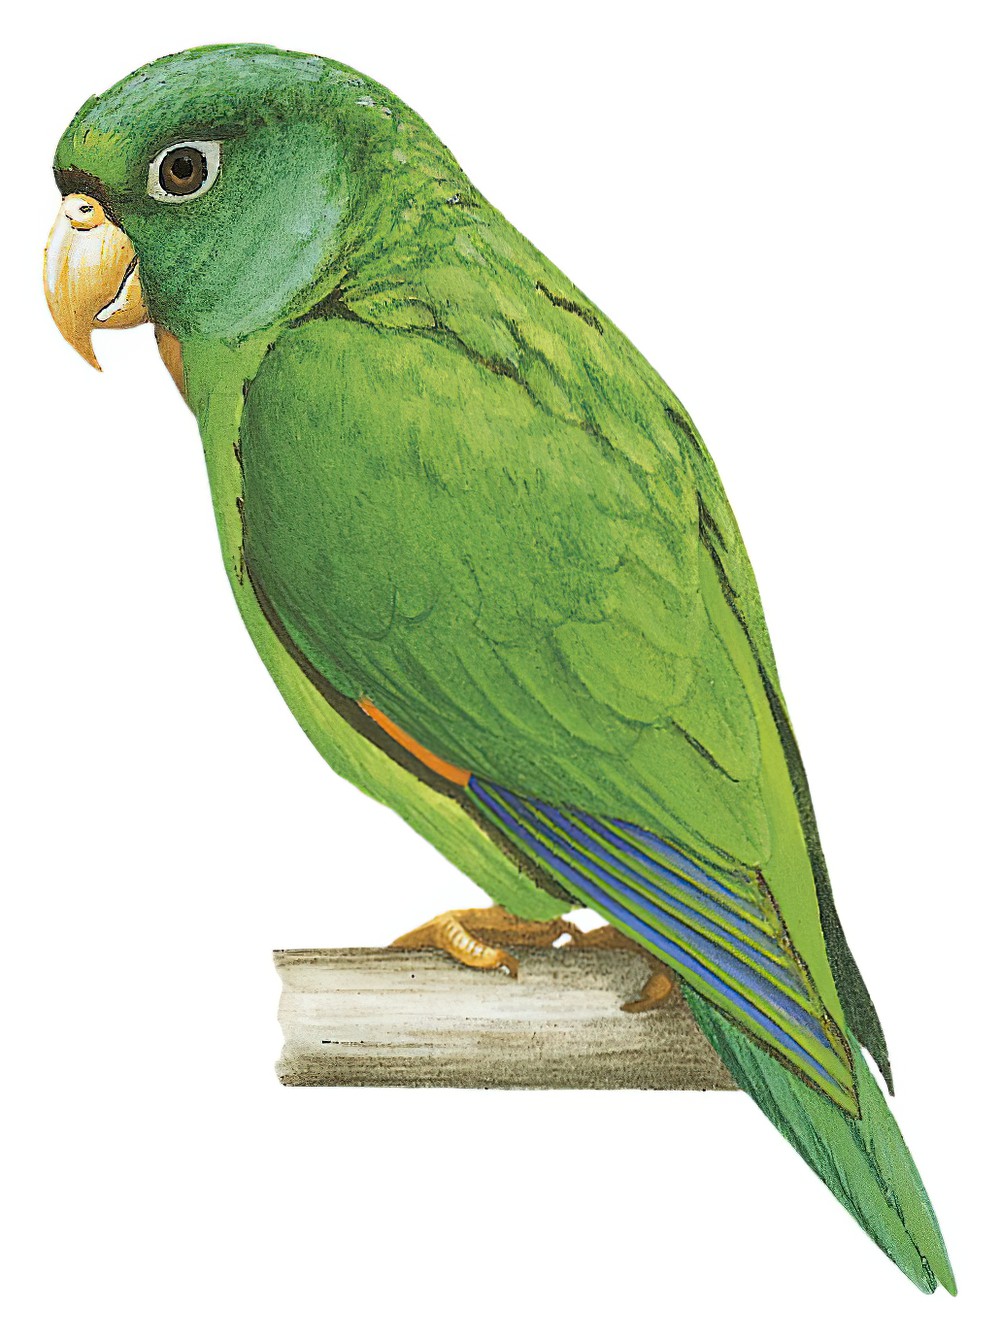 Golden-winged Parakeet / Brotogeris chrysoptera